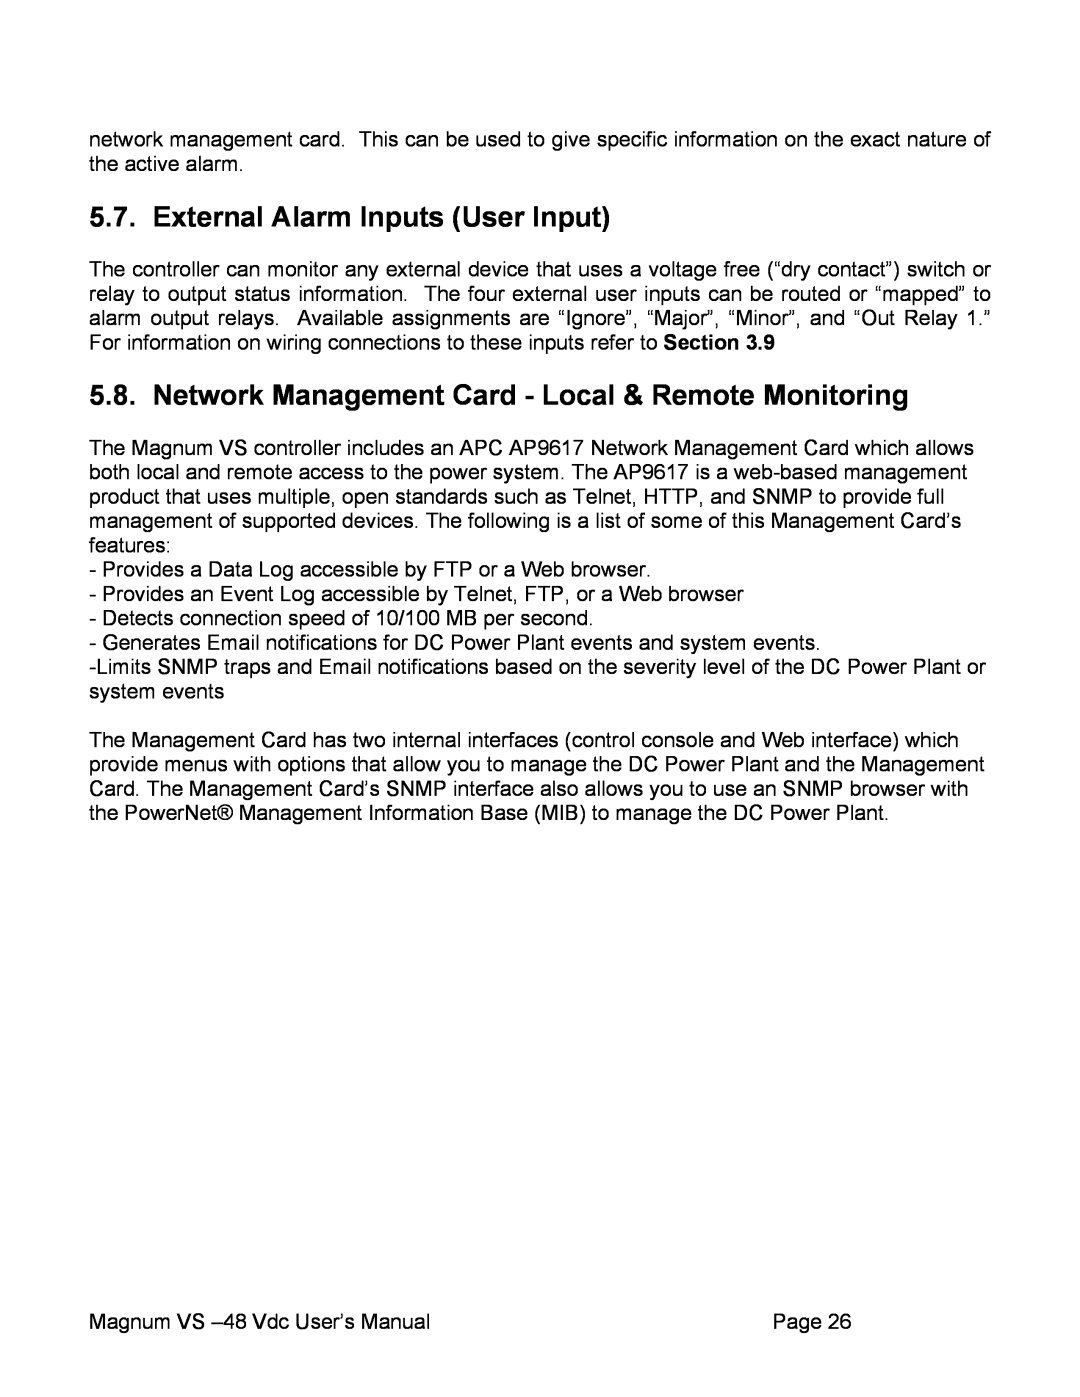 APC VS 50, VS 100 user manual External Alarm Inputs User Input, Network Management Card - Local & Remote Monitoring 